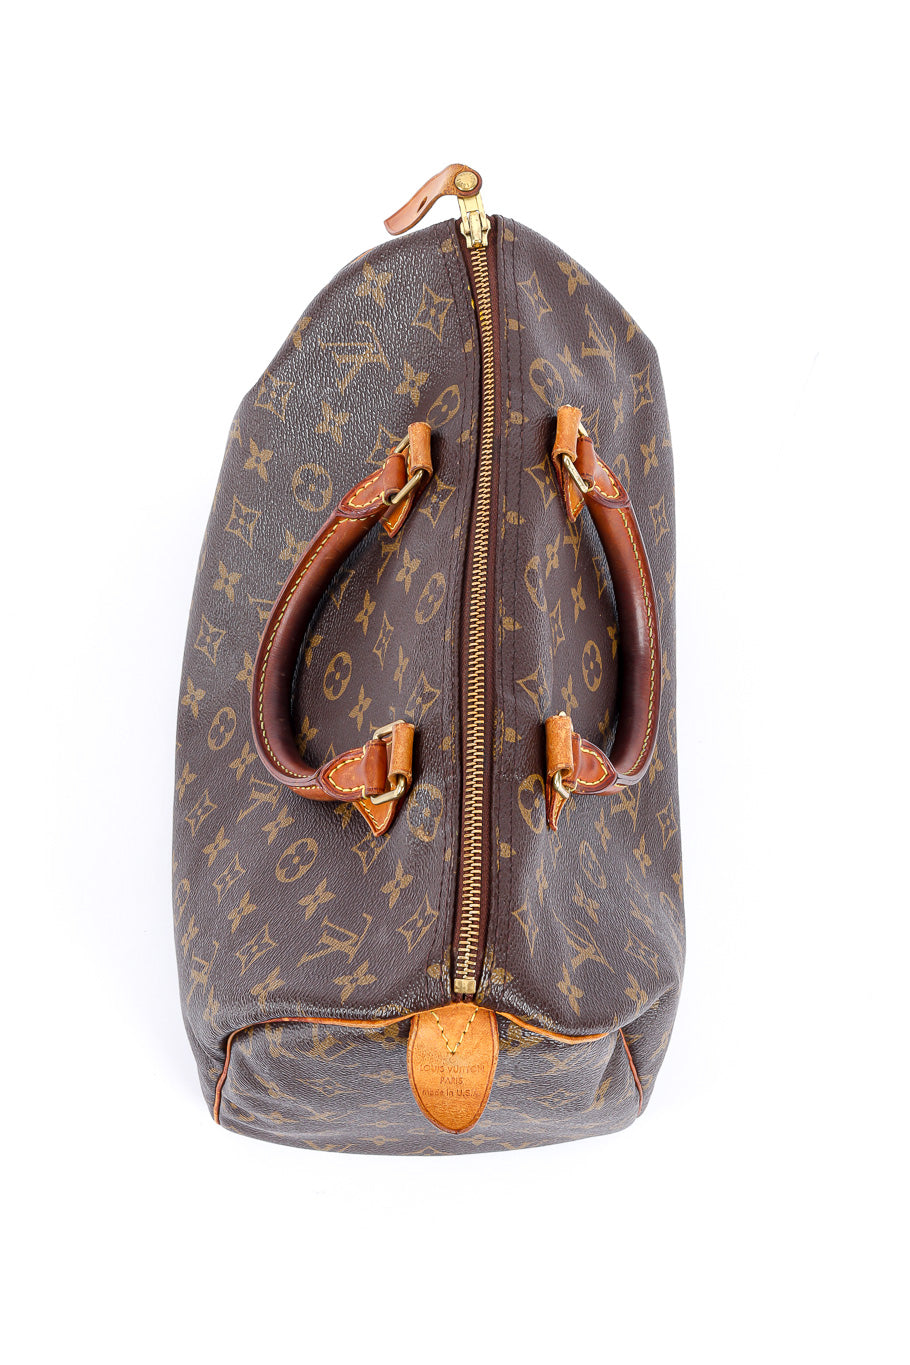 Vintage Louis Vuitton Classic Monogram Speedy 30 Bag II top view @Recessla